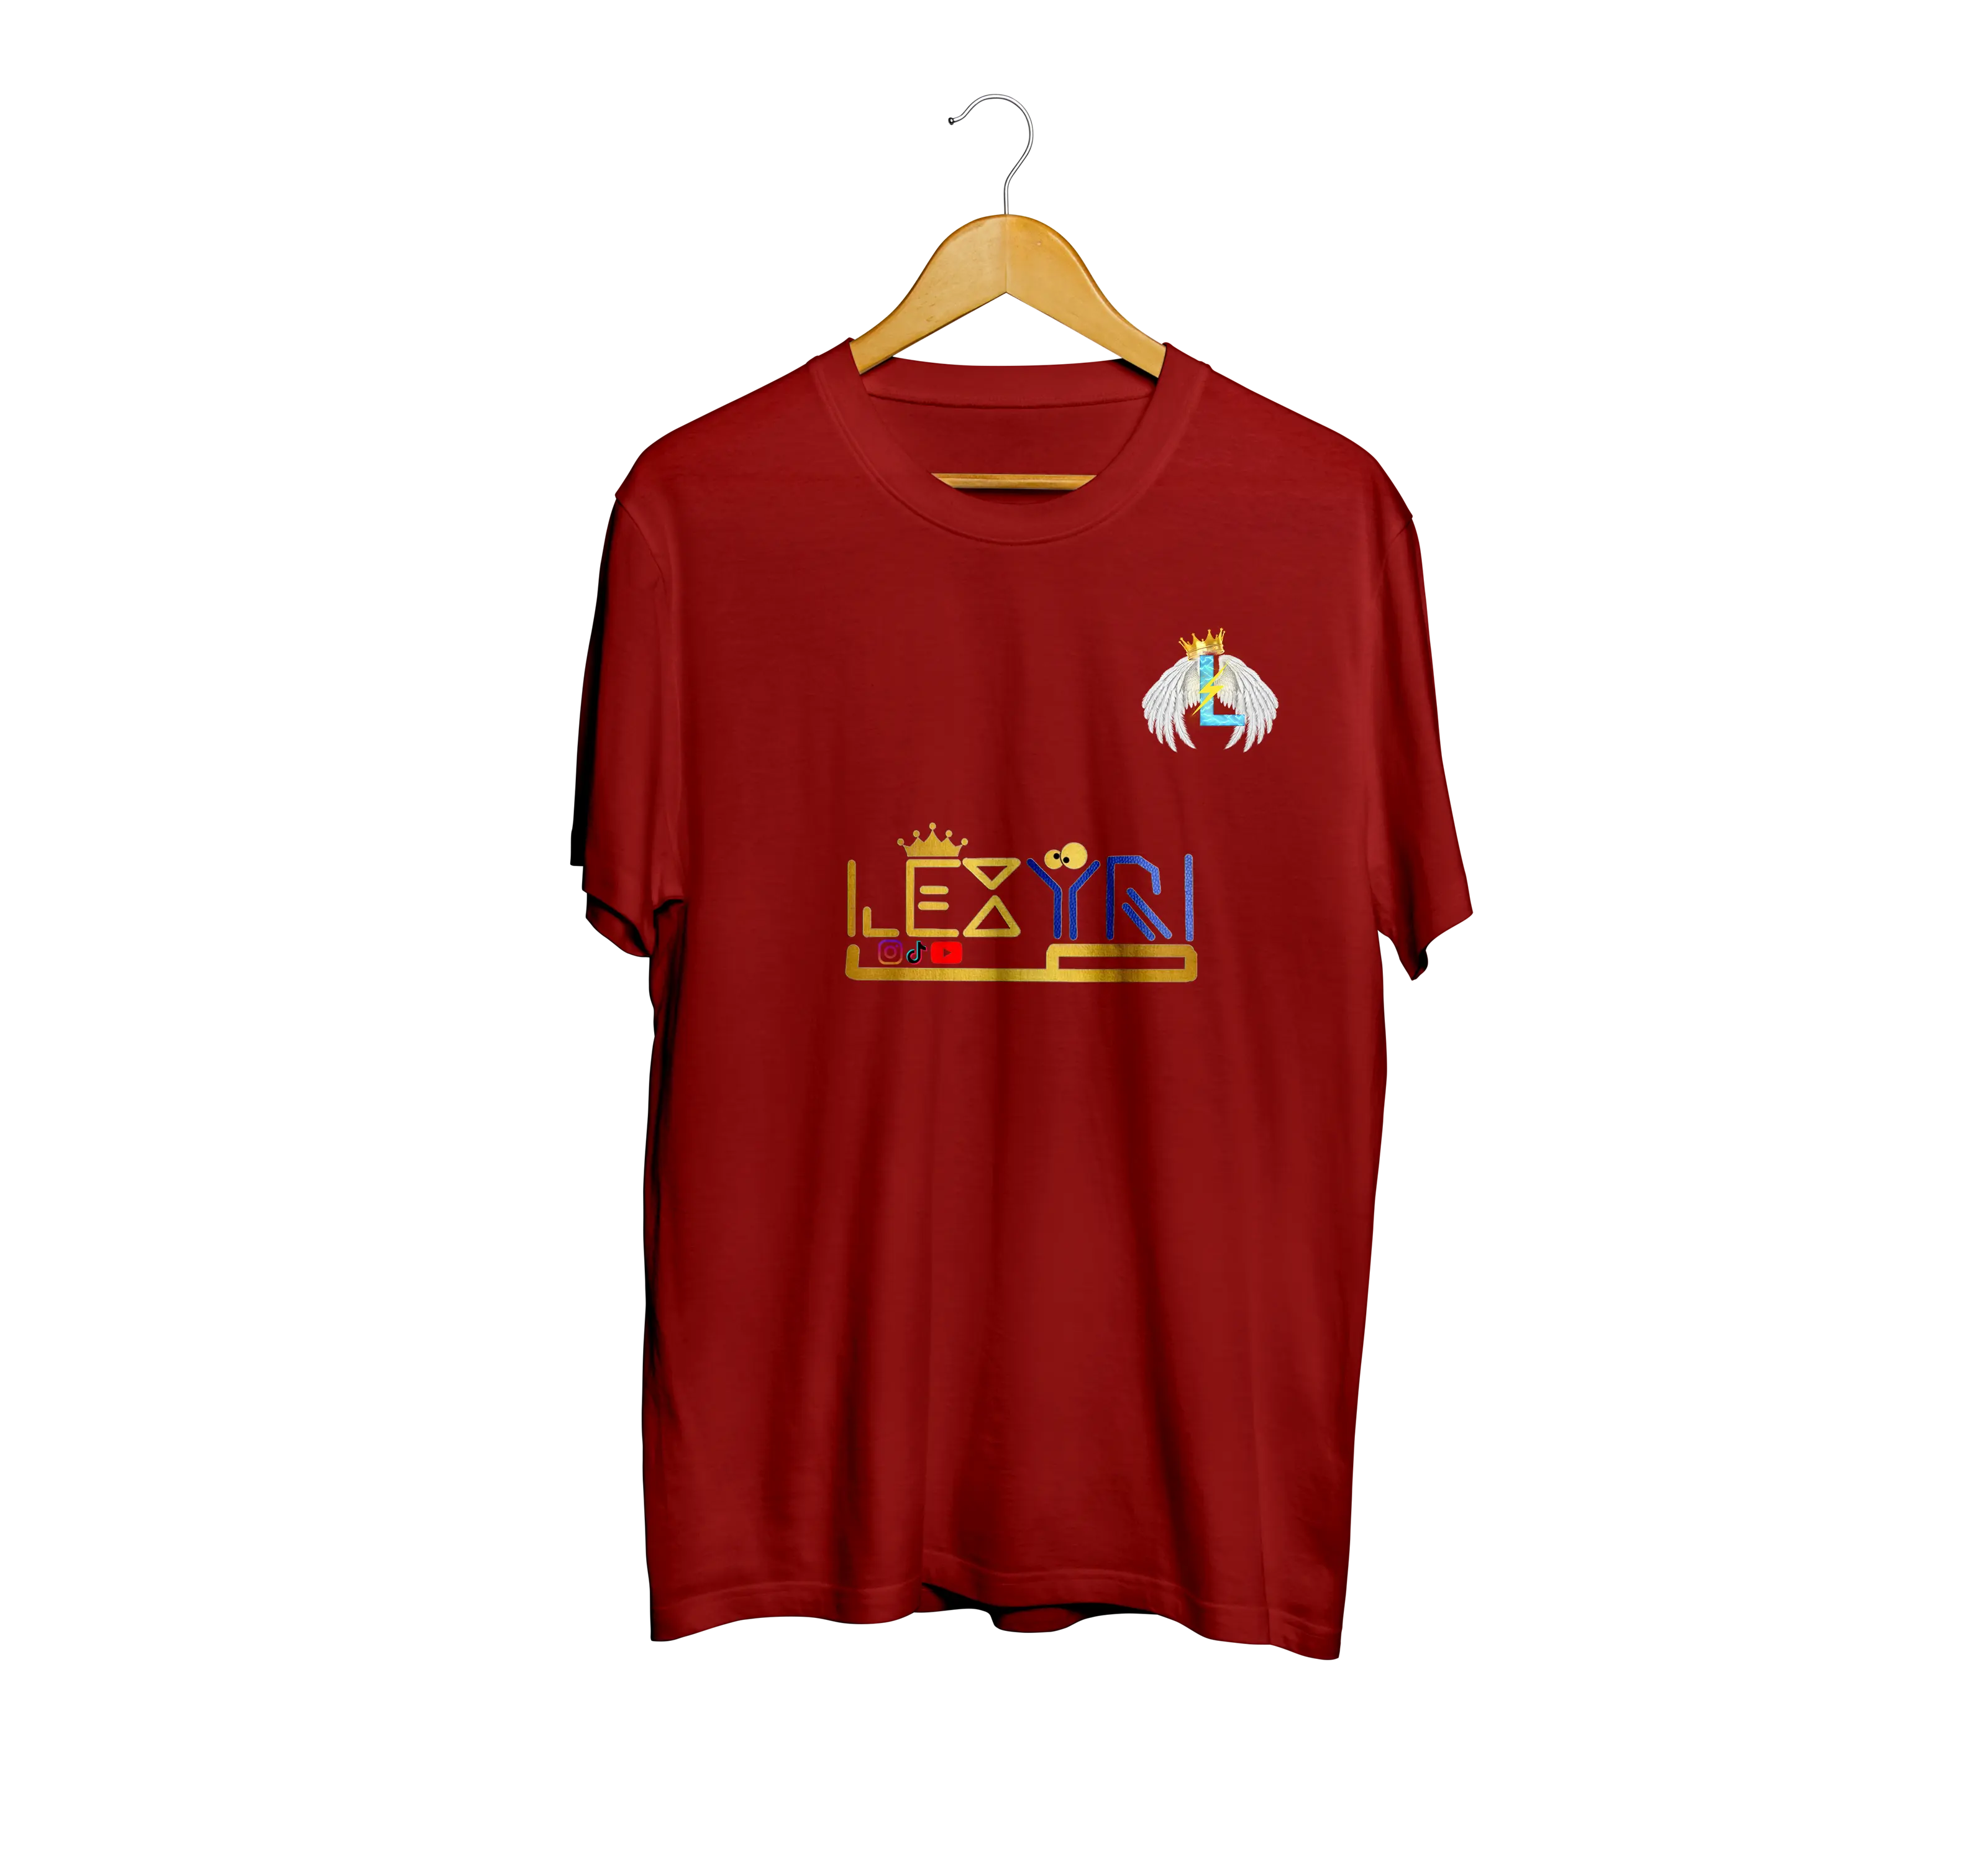 lexyri9 t-shirt